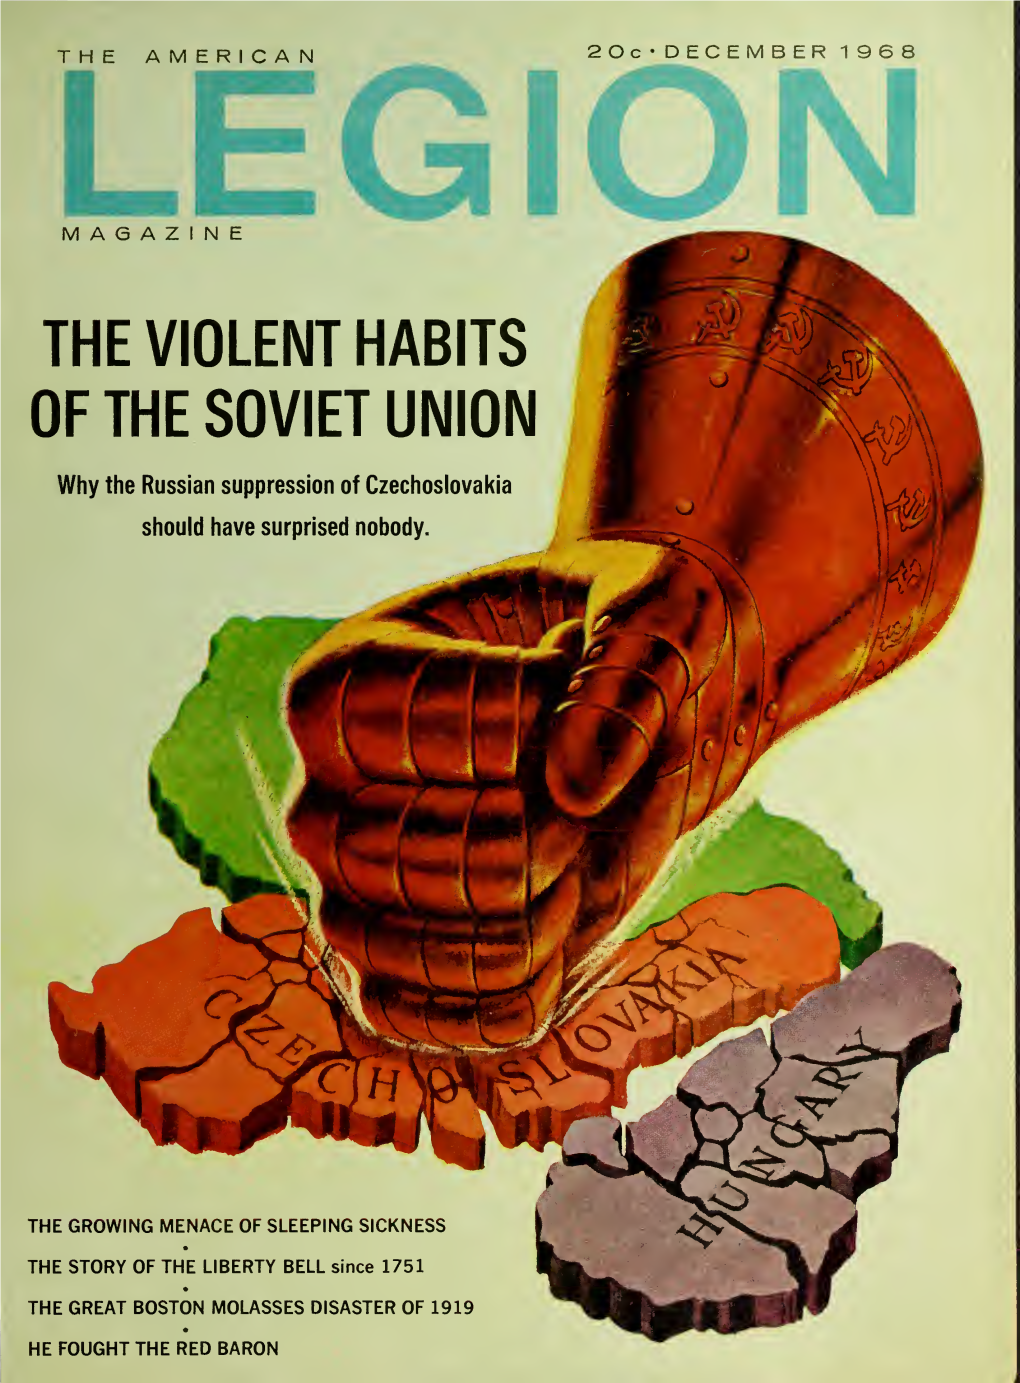 The American Legion Magazine [Volume 85, No. 6 (December 1968)]